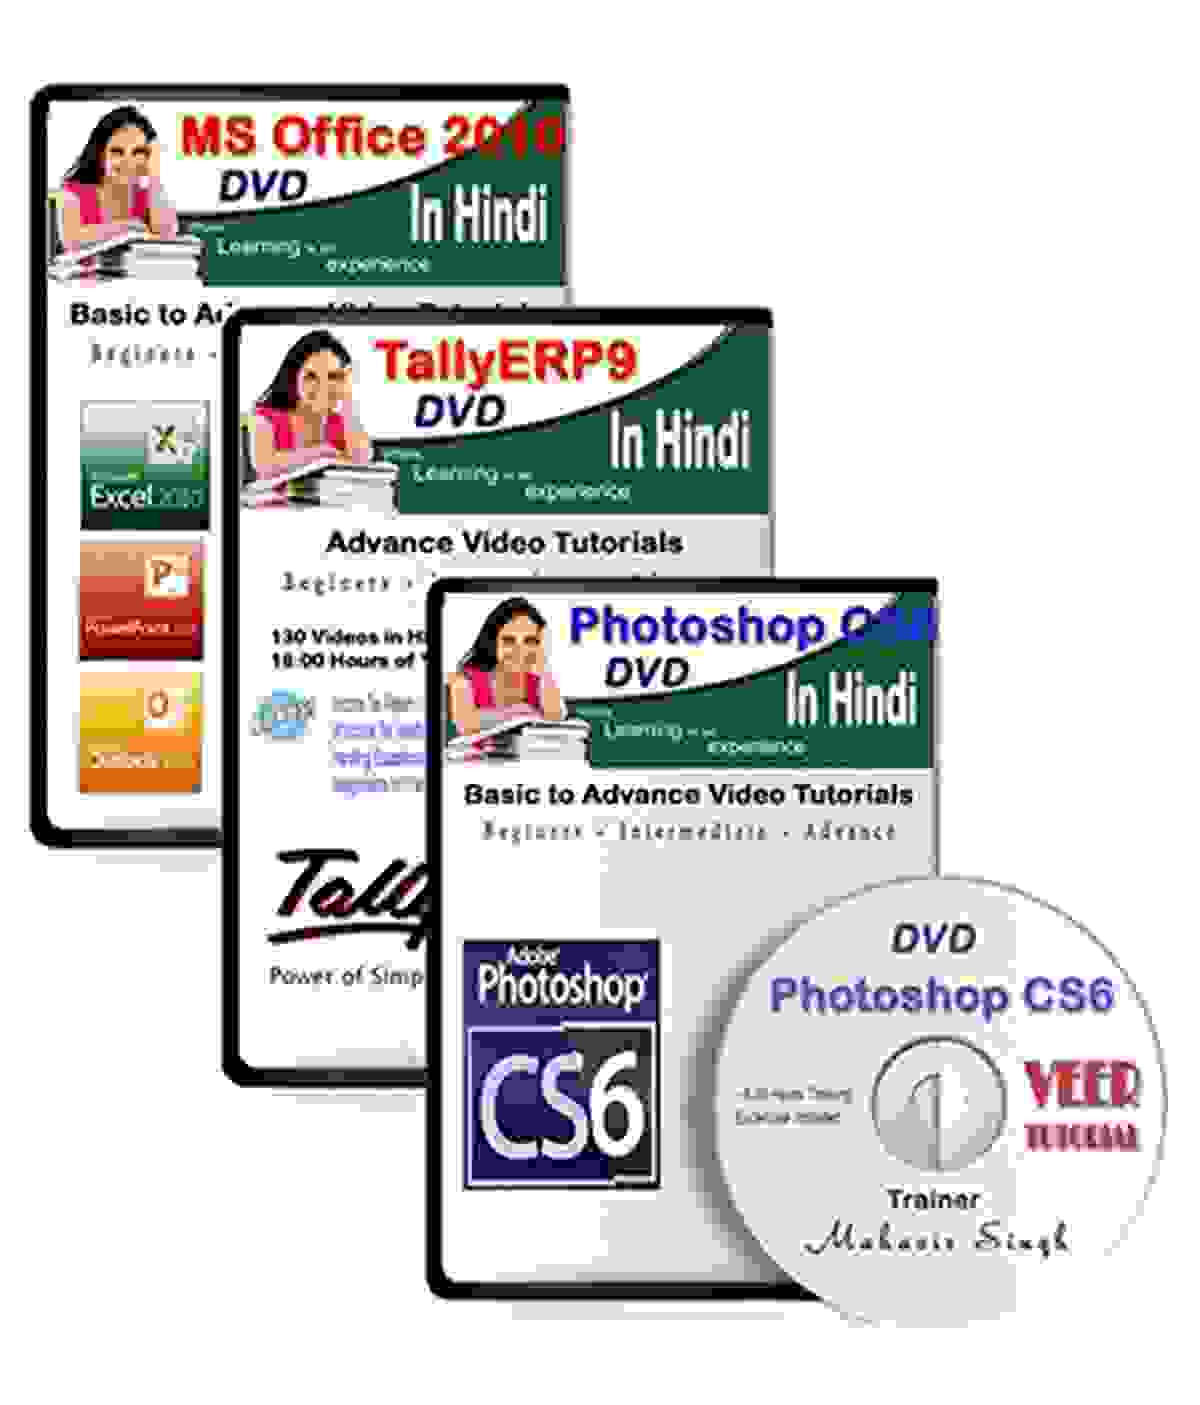 TallyERP9 + MS Office 2010 + Photoshop CS6 (34 Hrs Training, 282 Videos) in Hindi(DVD)